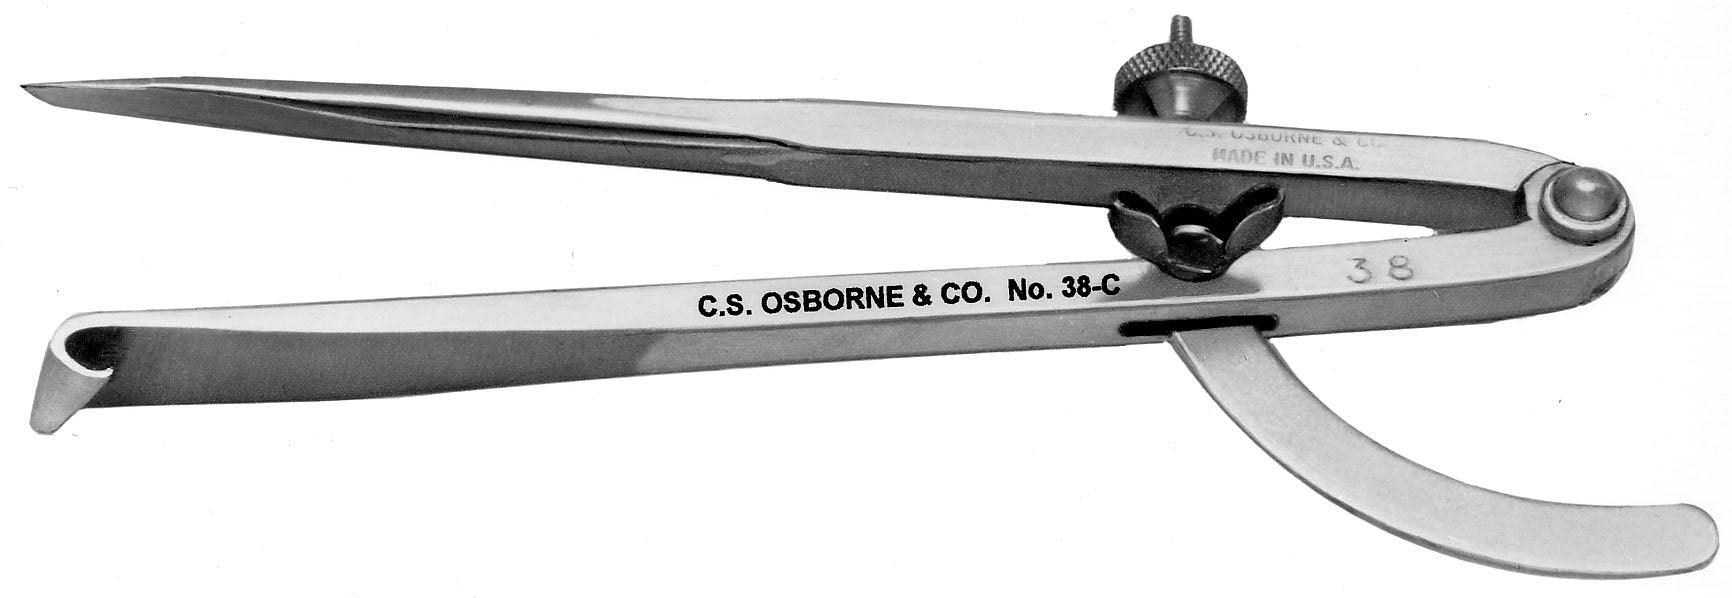 C.S. Osborne Scratch Compass - Alan Richard Textiles, LTD C.S. Osborne